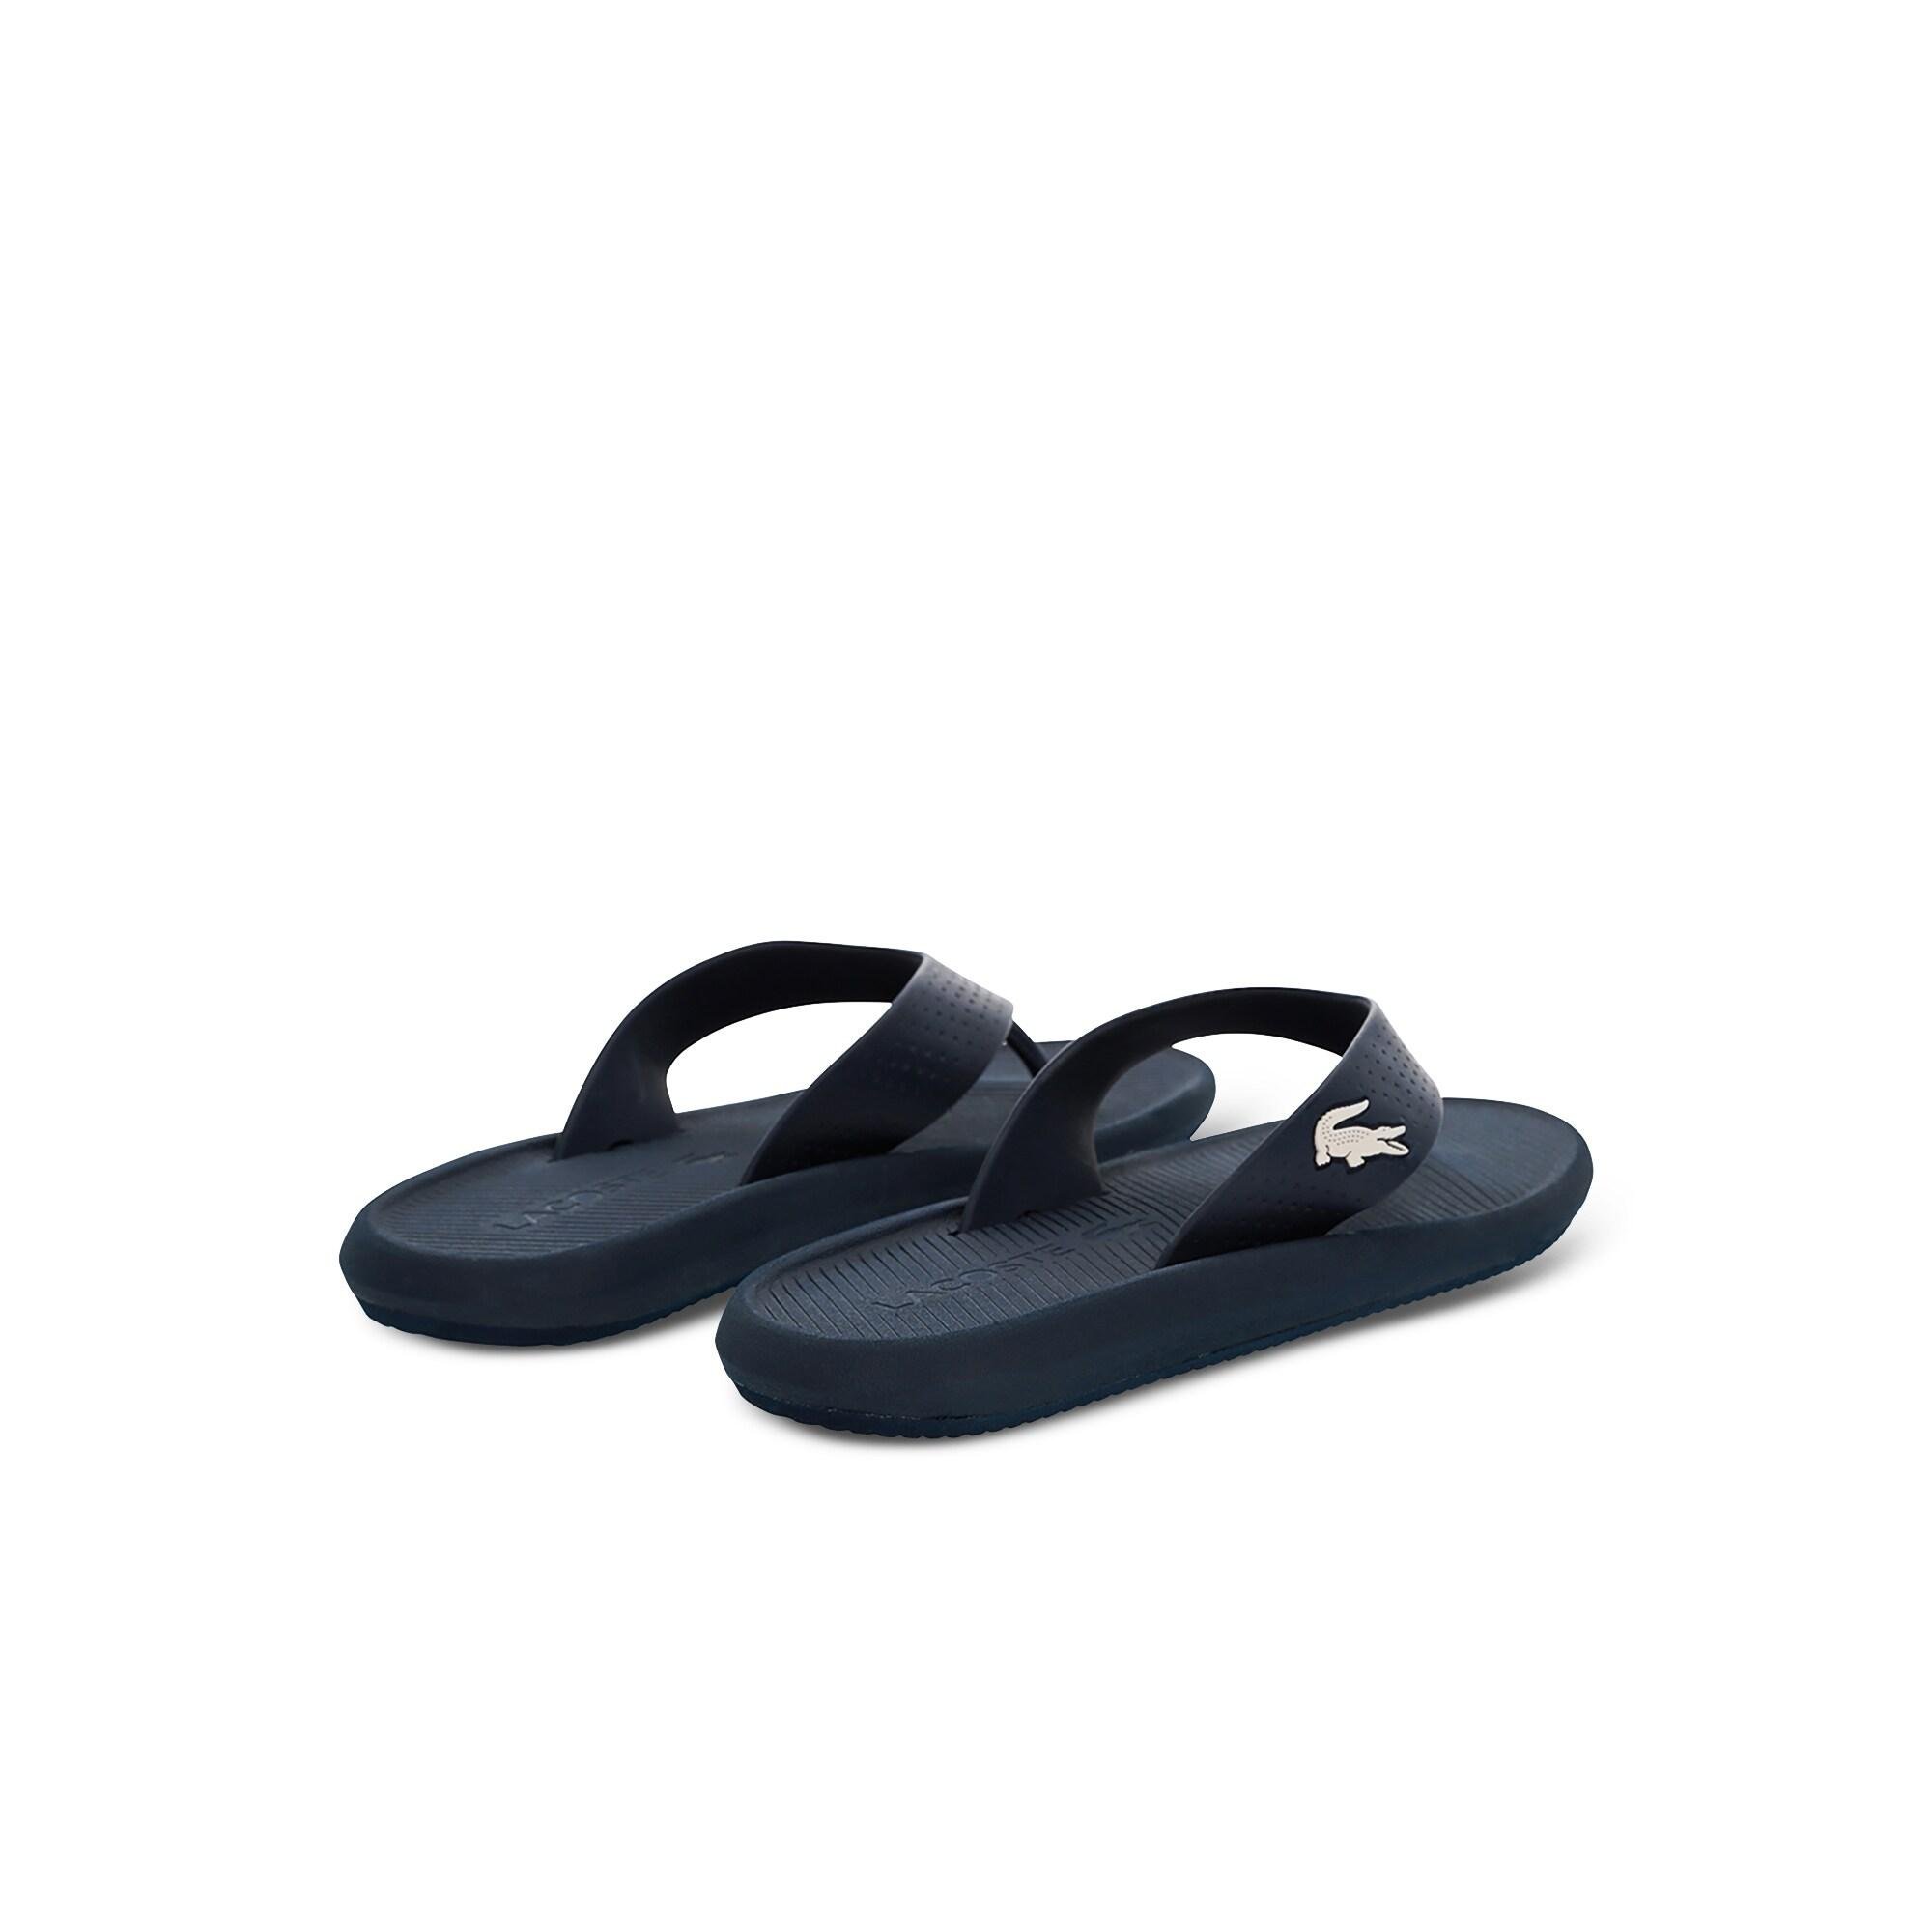 Lacoste Men's Croco Sandal 219 1 Cma Slippers